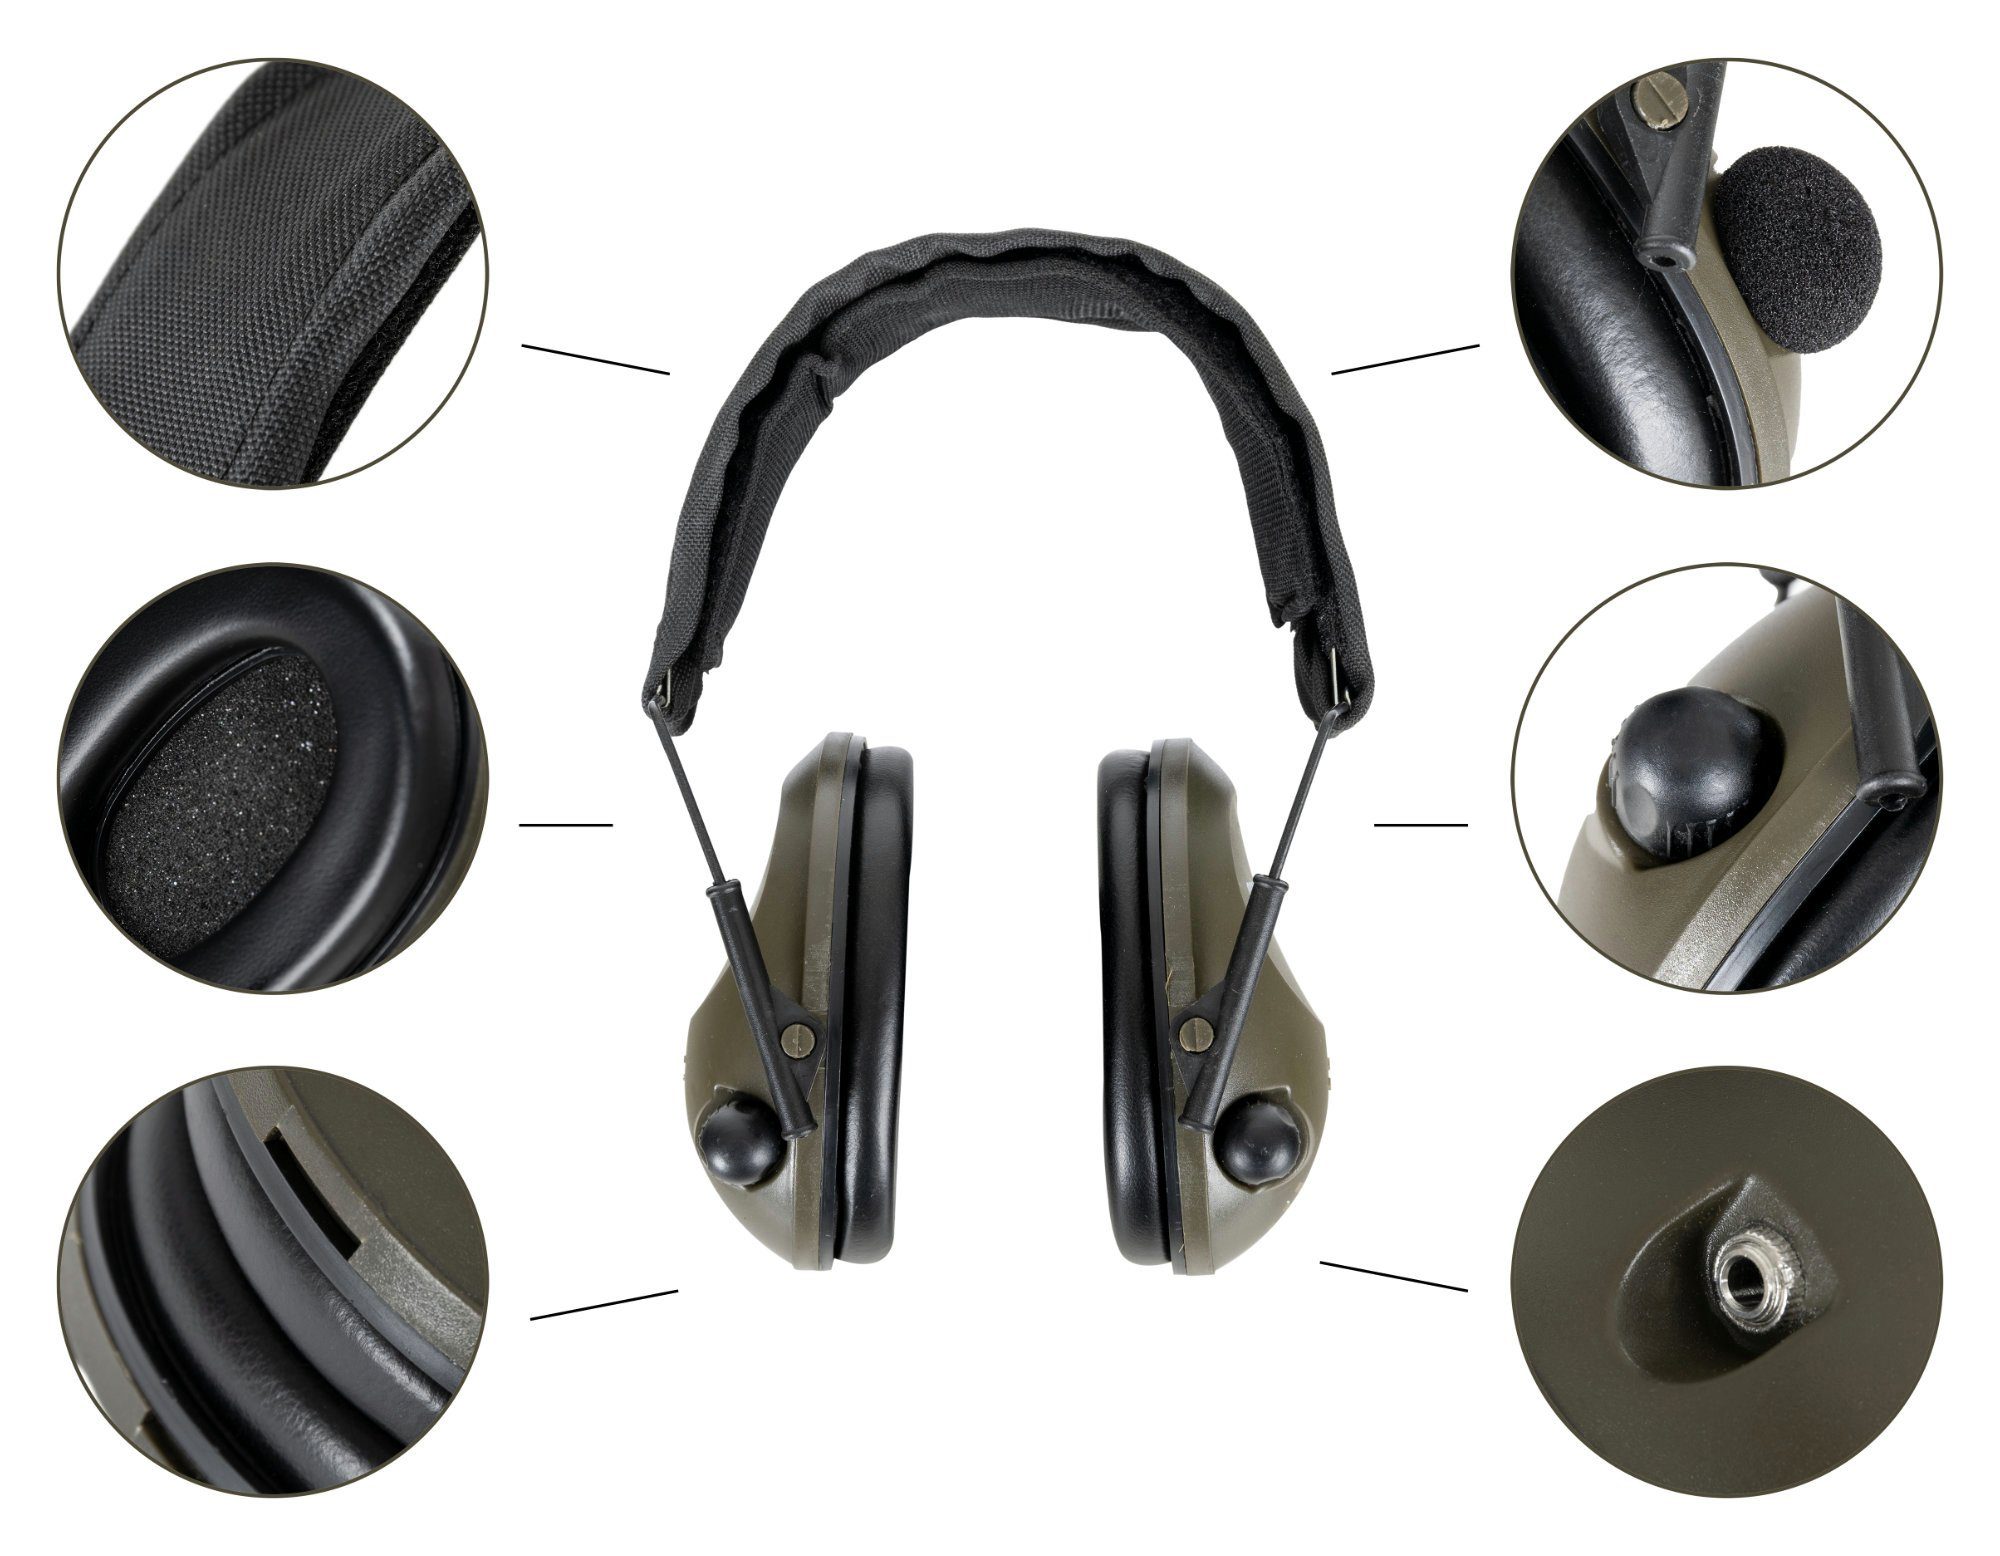 ContraNoise Bügelgehörschutz mit “Active-Volume-System”, Stagecaptain Gehörschutz Größenverstellbar Kopfhörer